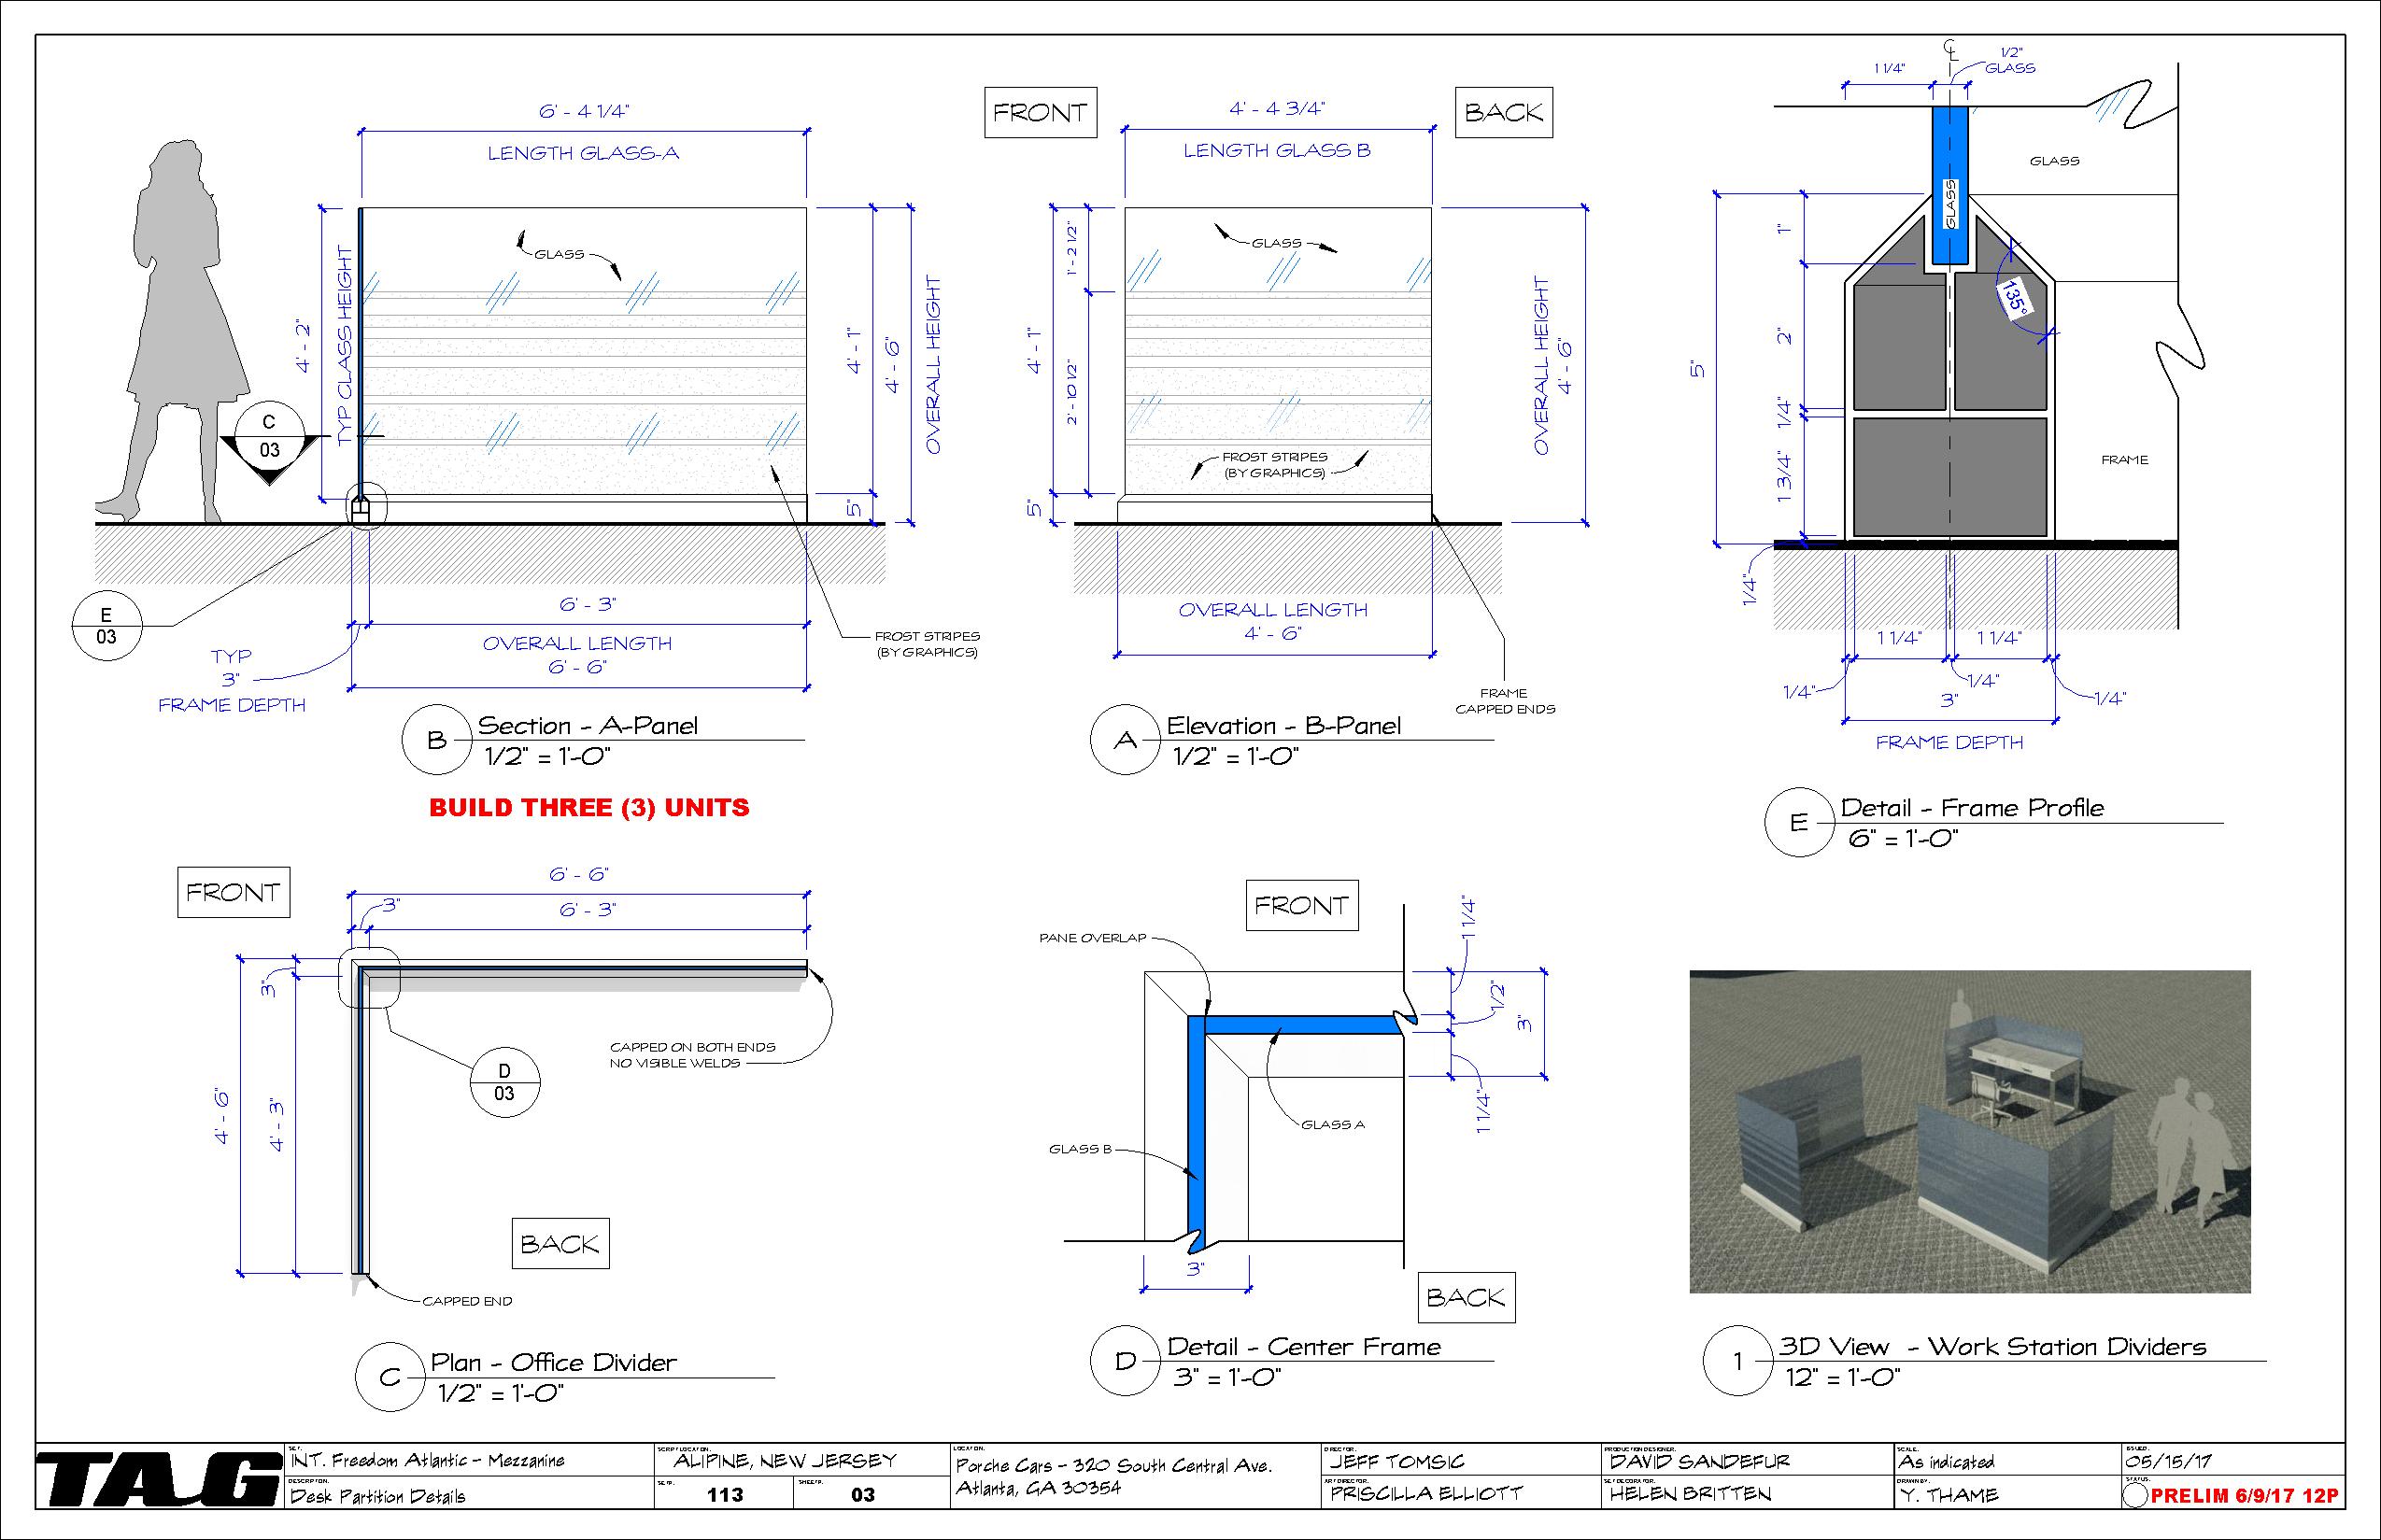 INTFreedomAtlantic-Mezzanine - Sheet - 03 - Desk Partition Details